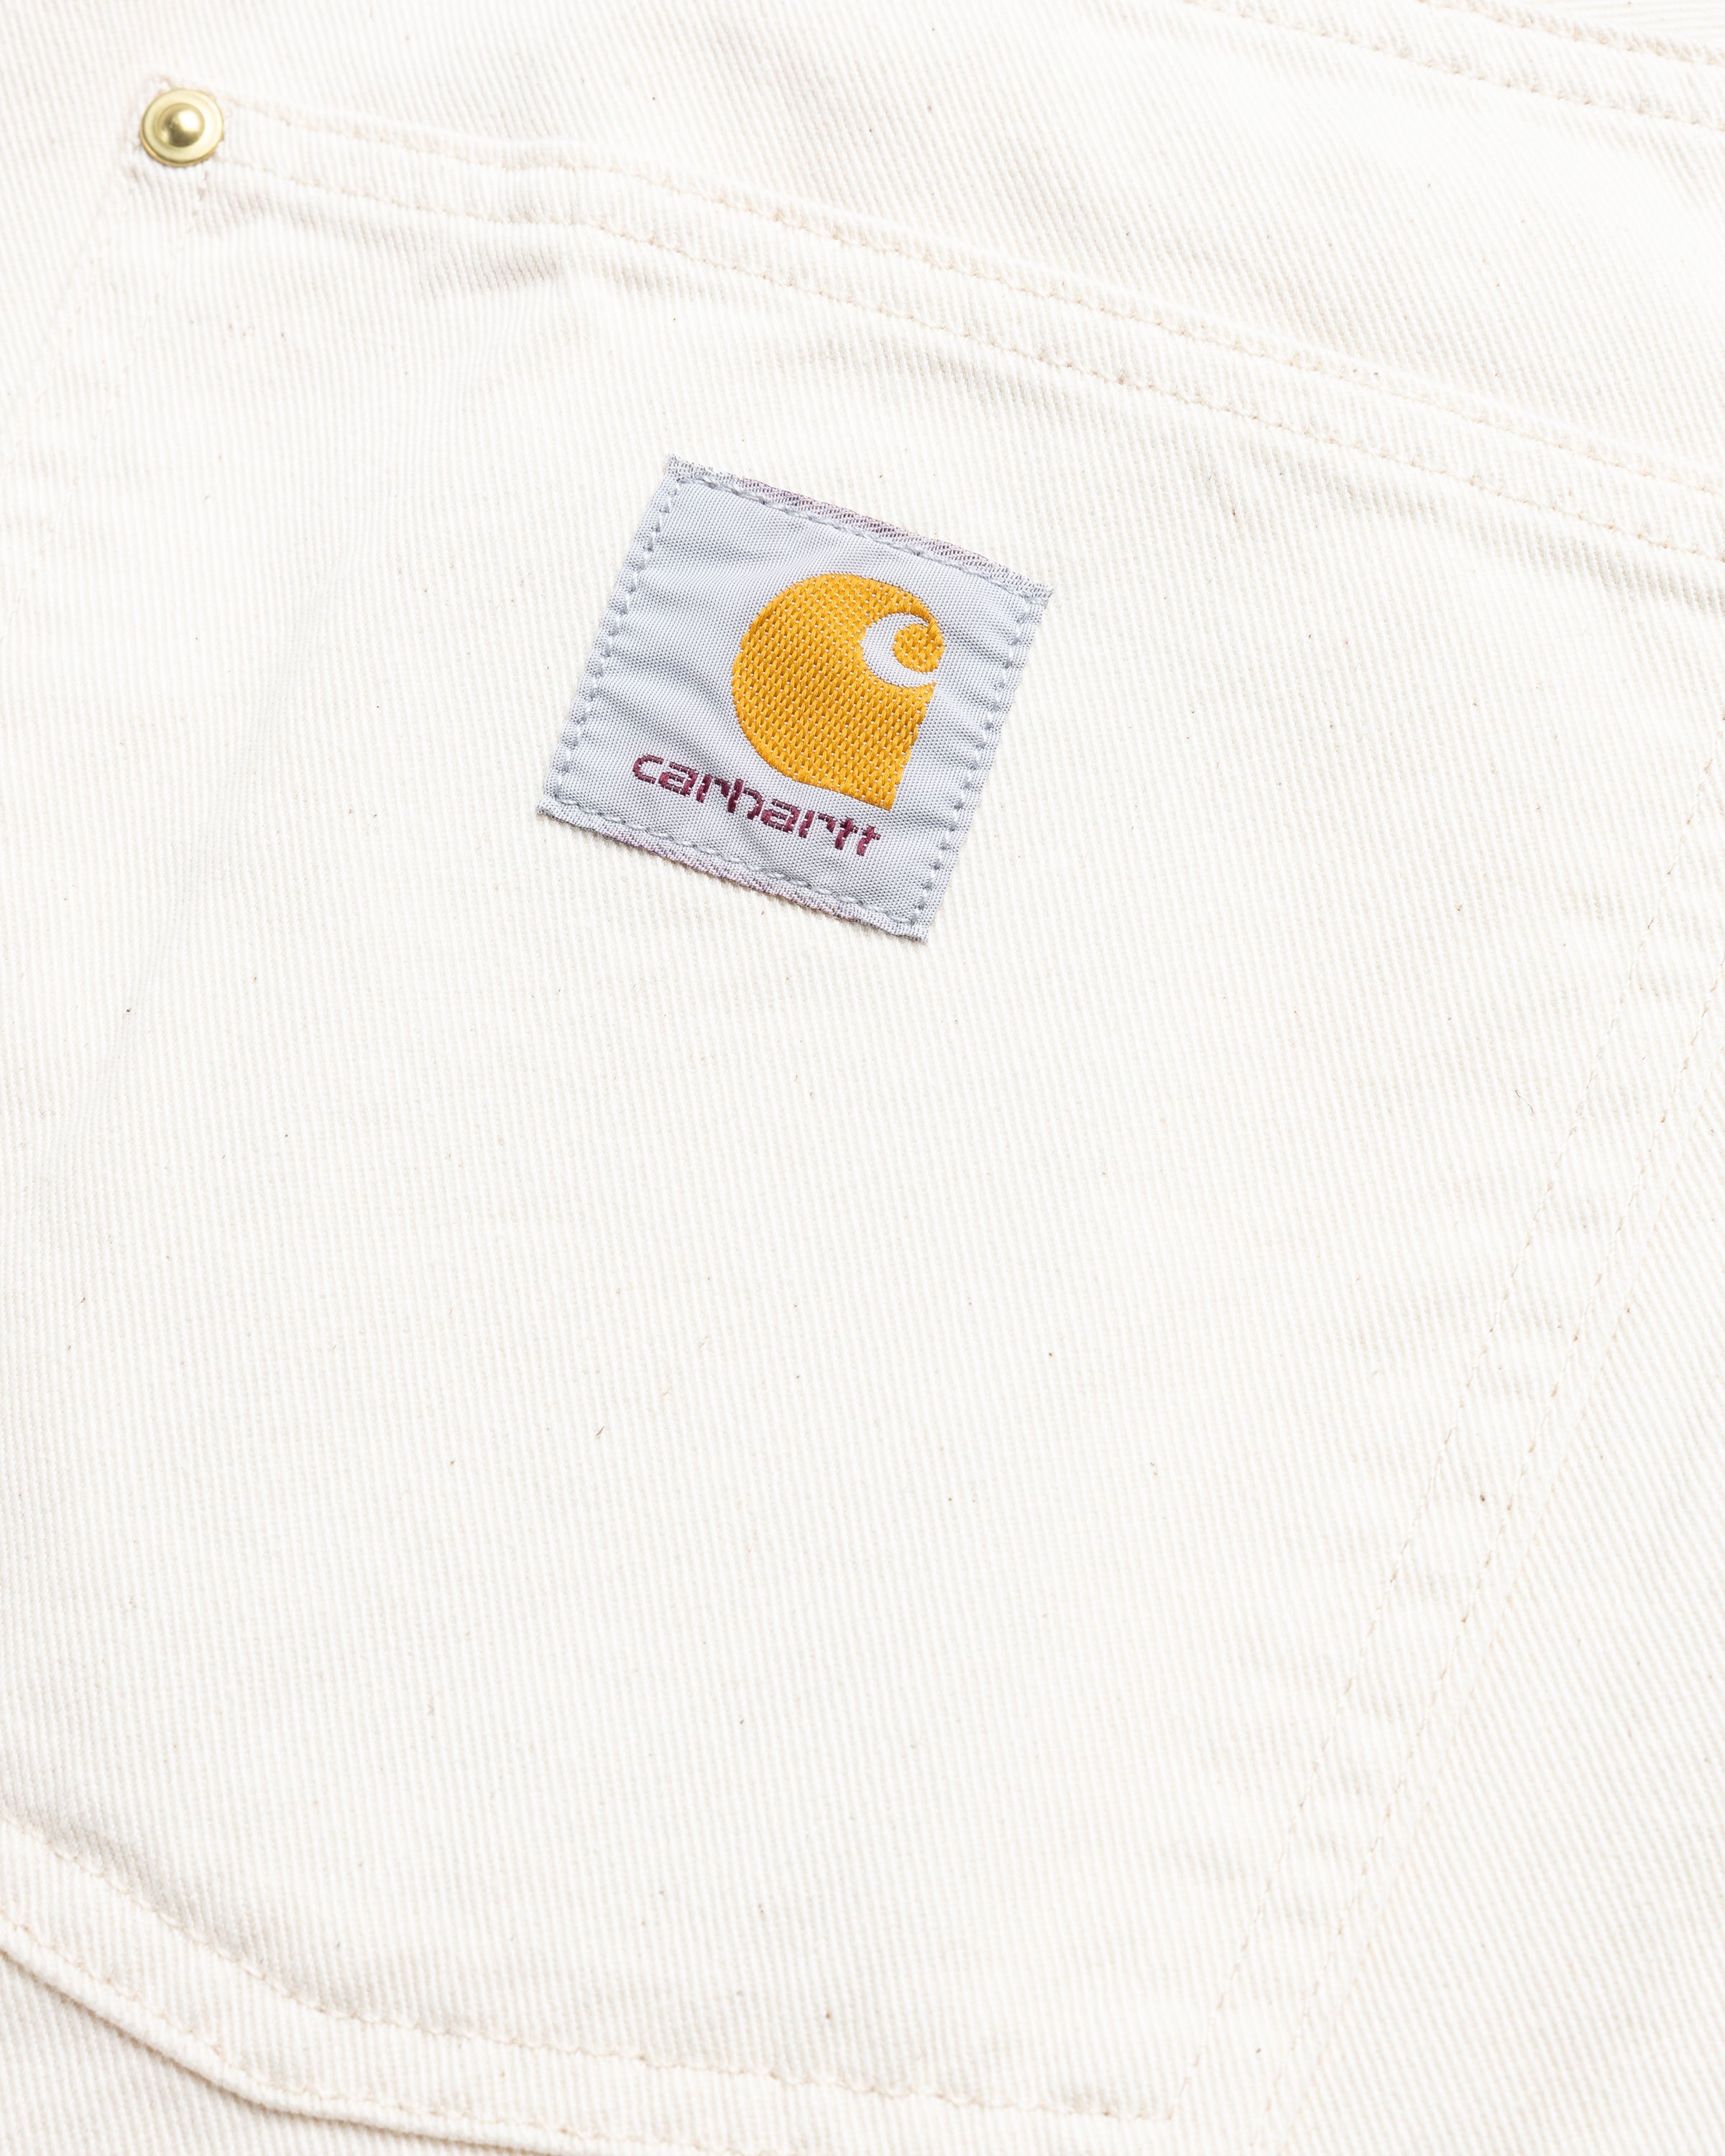 Carhartt WIP - Derby Pant Natural/Rinsed - Clothing - Beige - Image 4